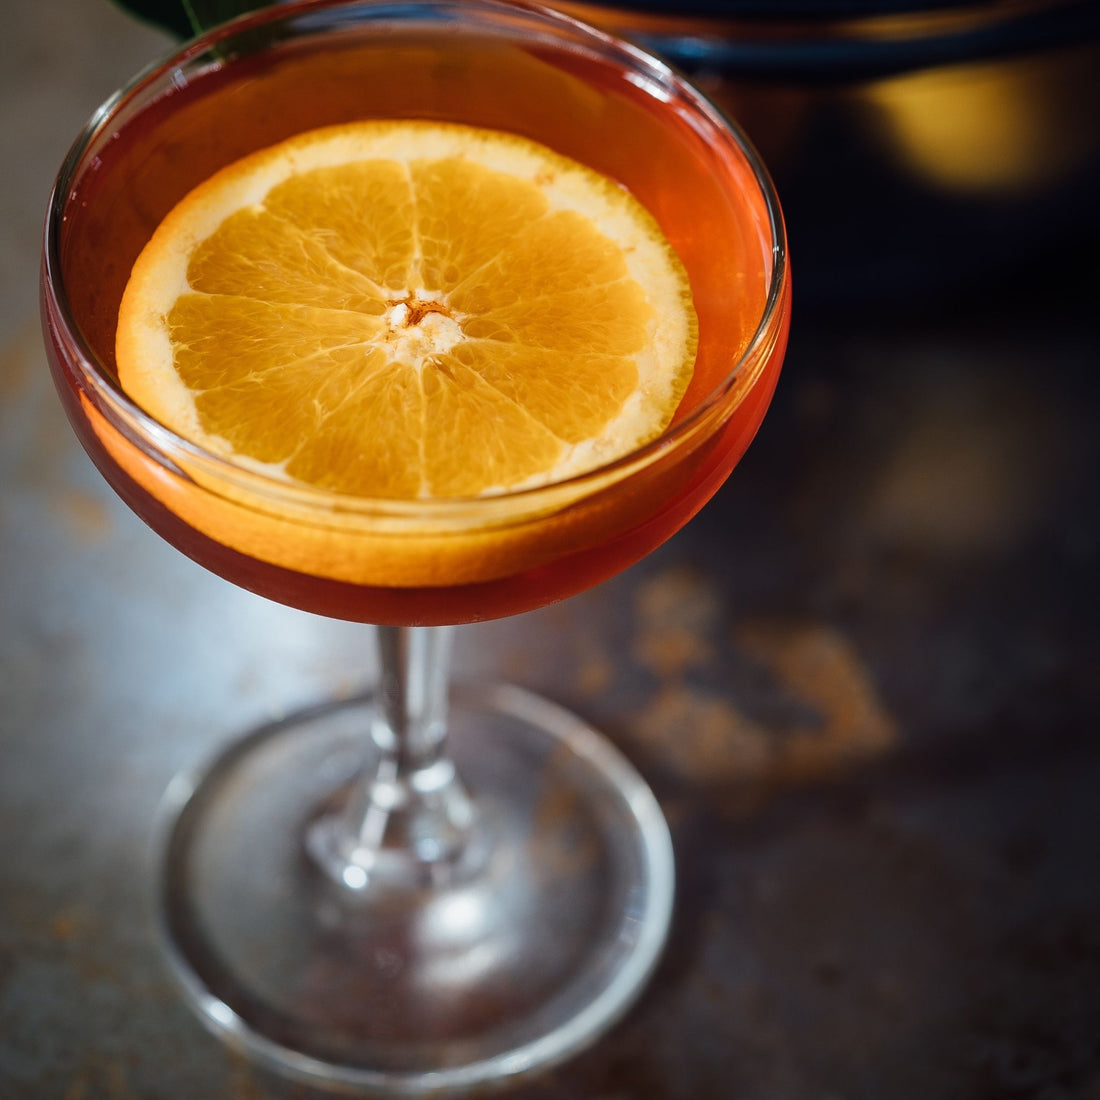 A photo of a non-alcoholic Bronx cocktail